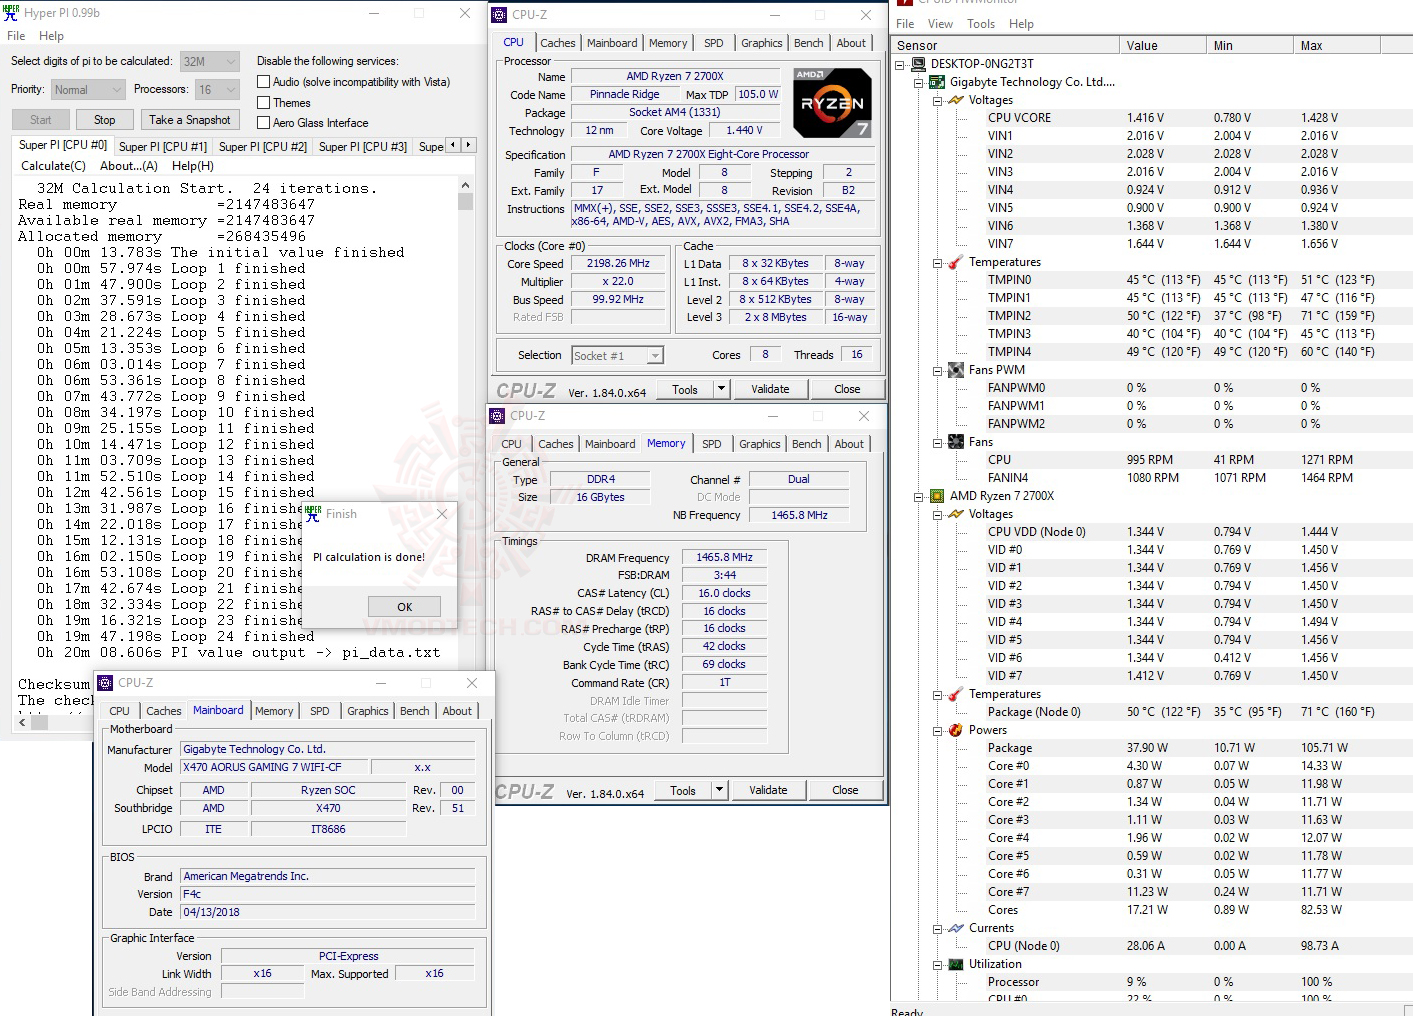 h32 1 AMD RYZEN 7 2700X PROCESSOR REVIEW